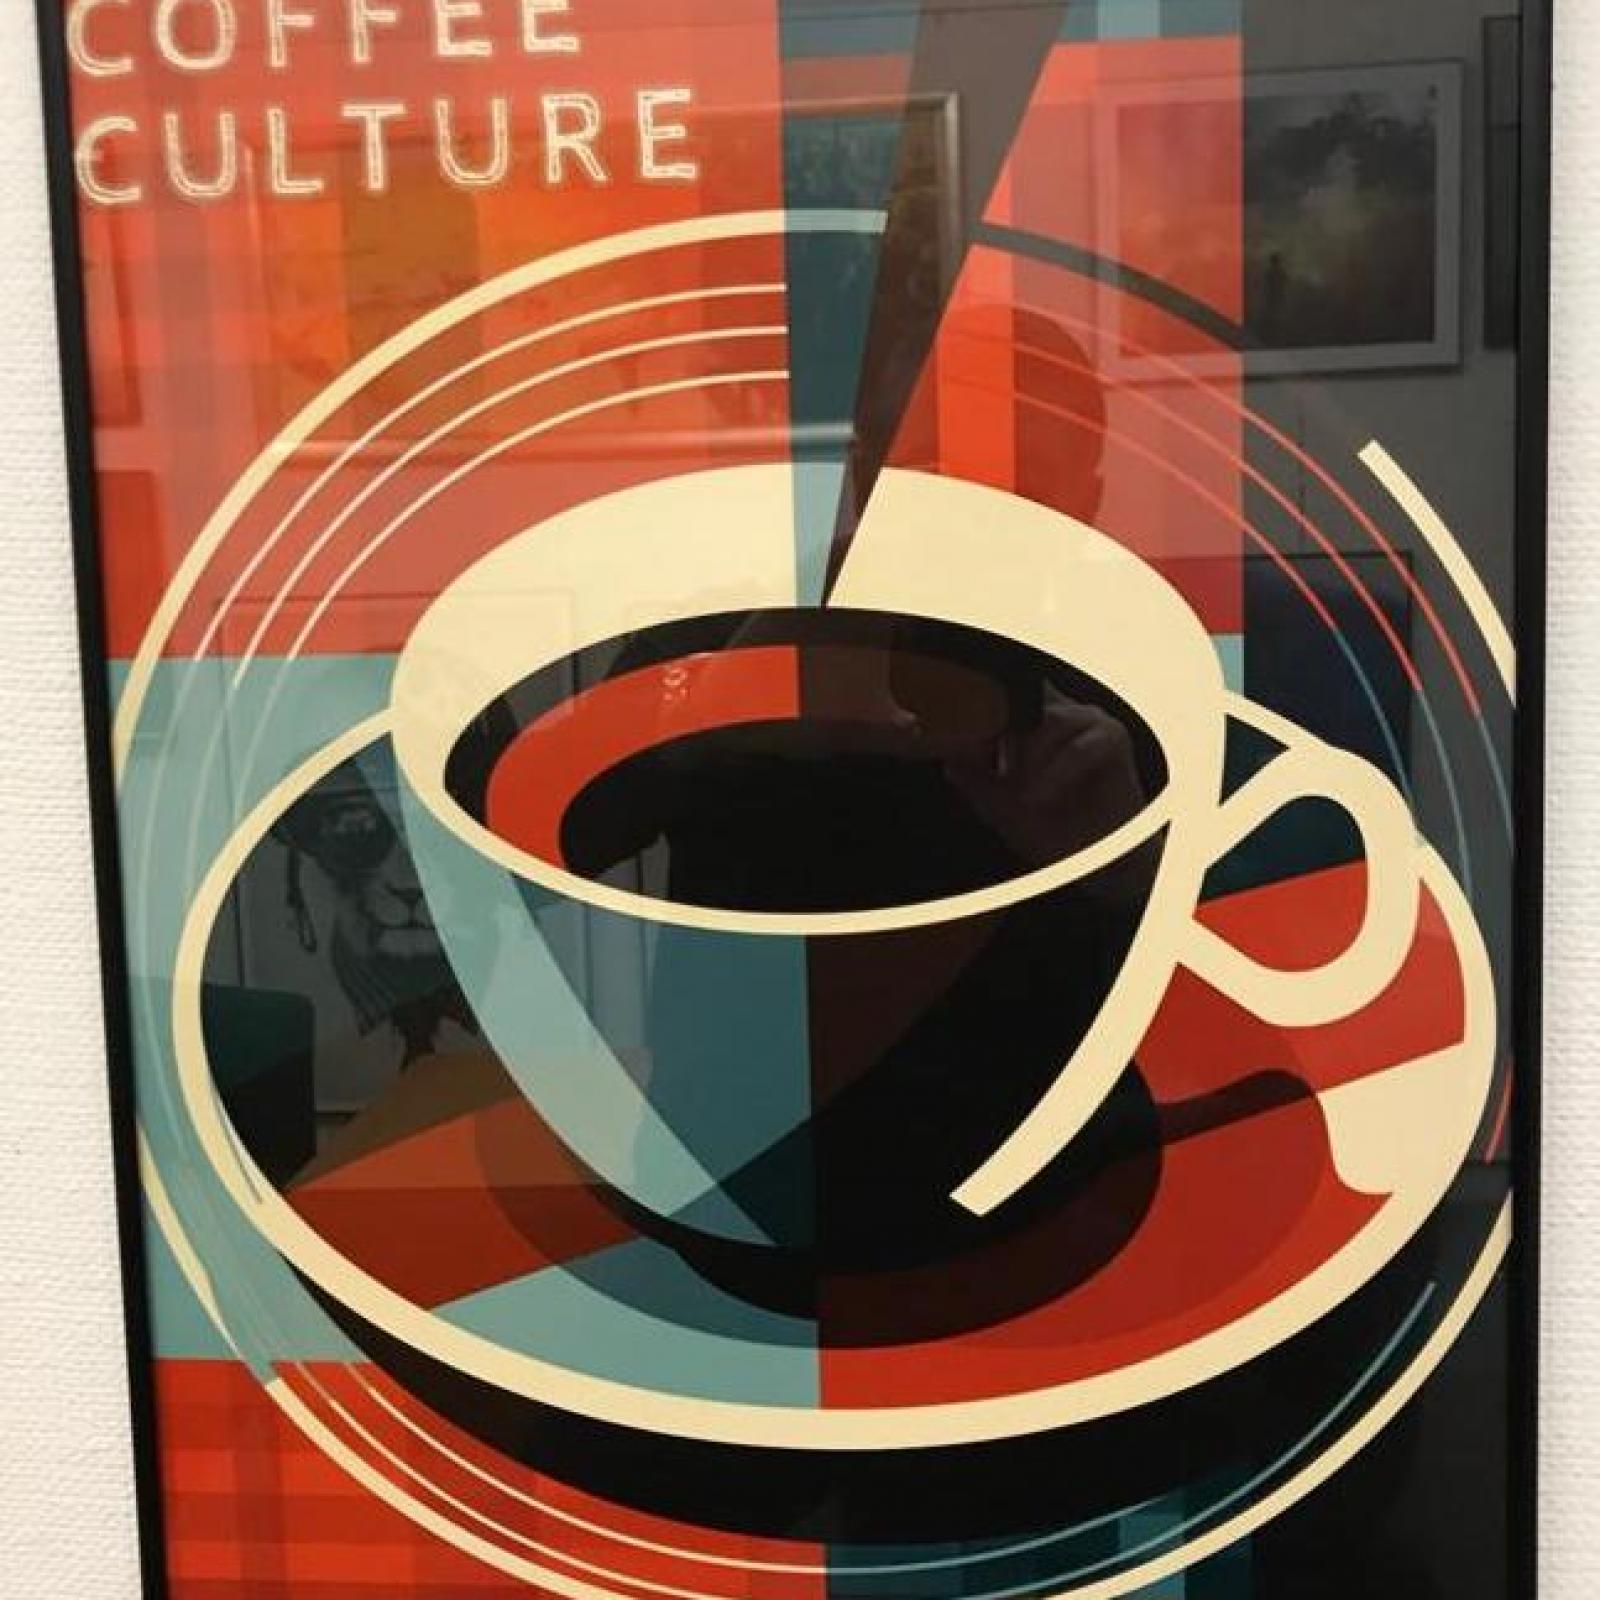 Coffee Culture small coffee